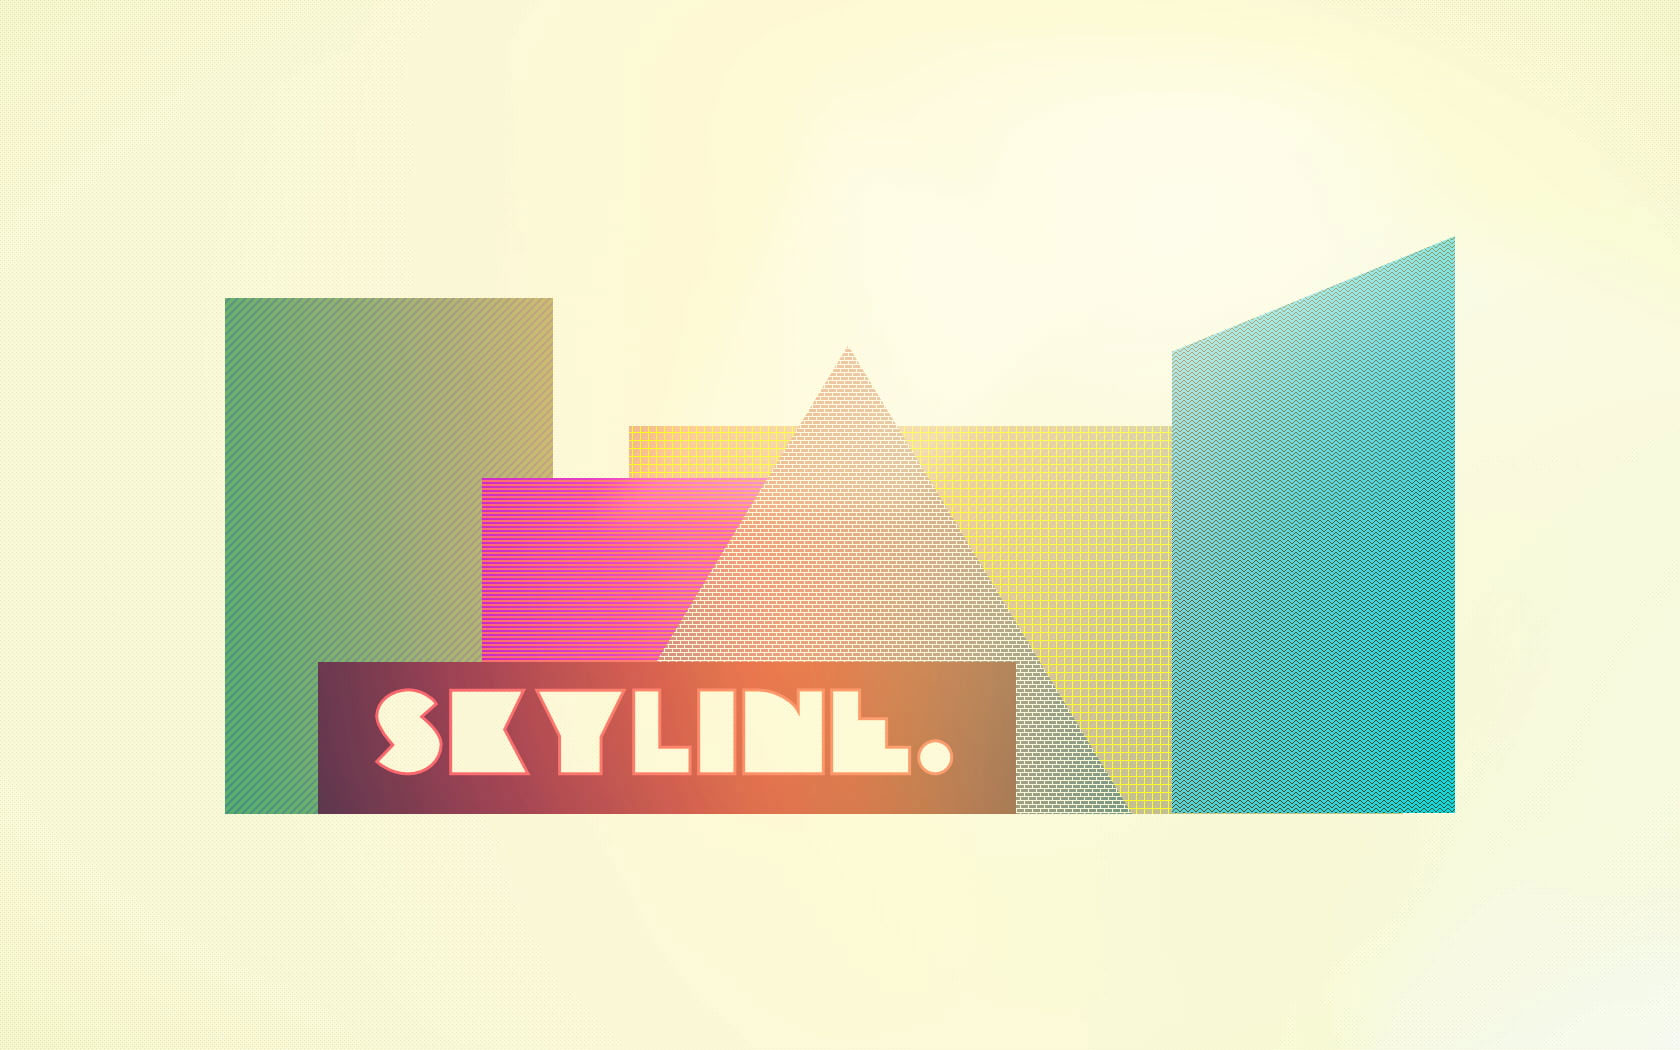 Skyline logo wallpaper, modern, vintage, digital art, artwork, simple background